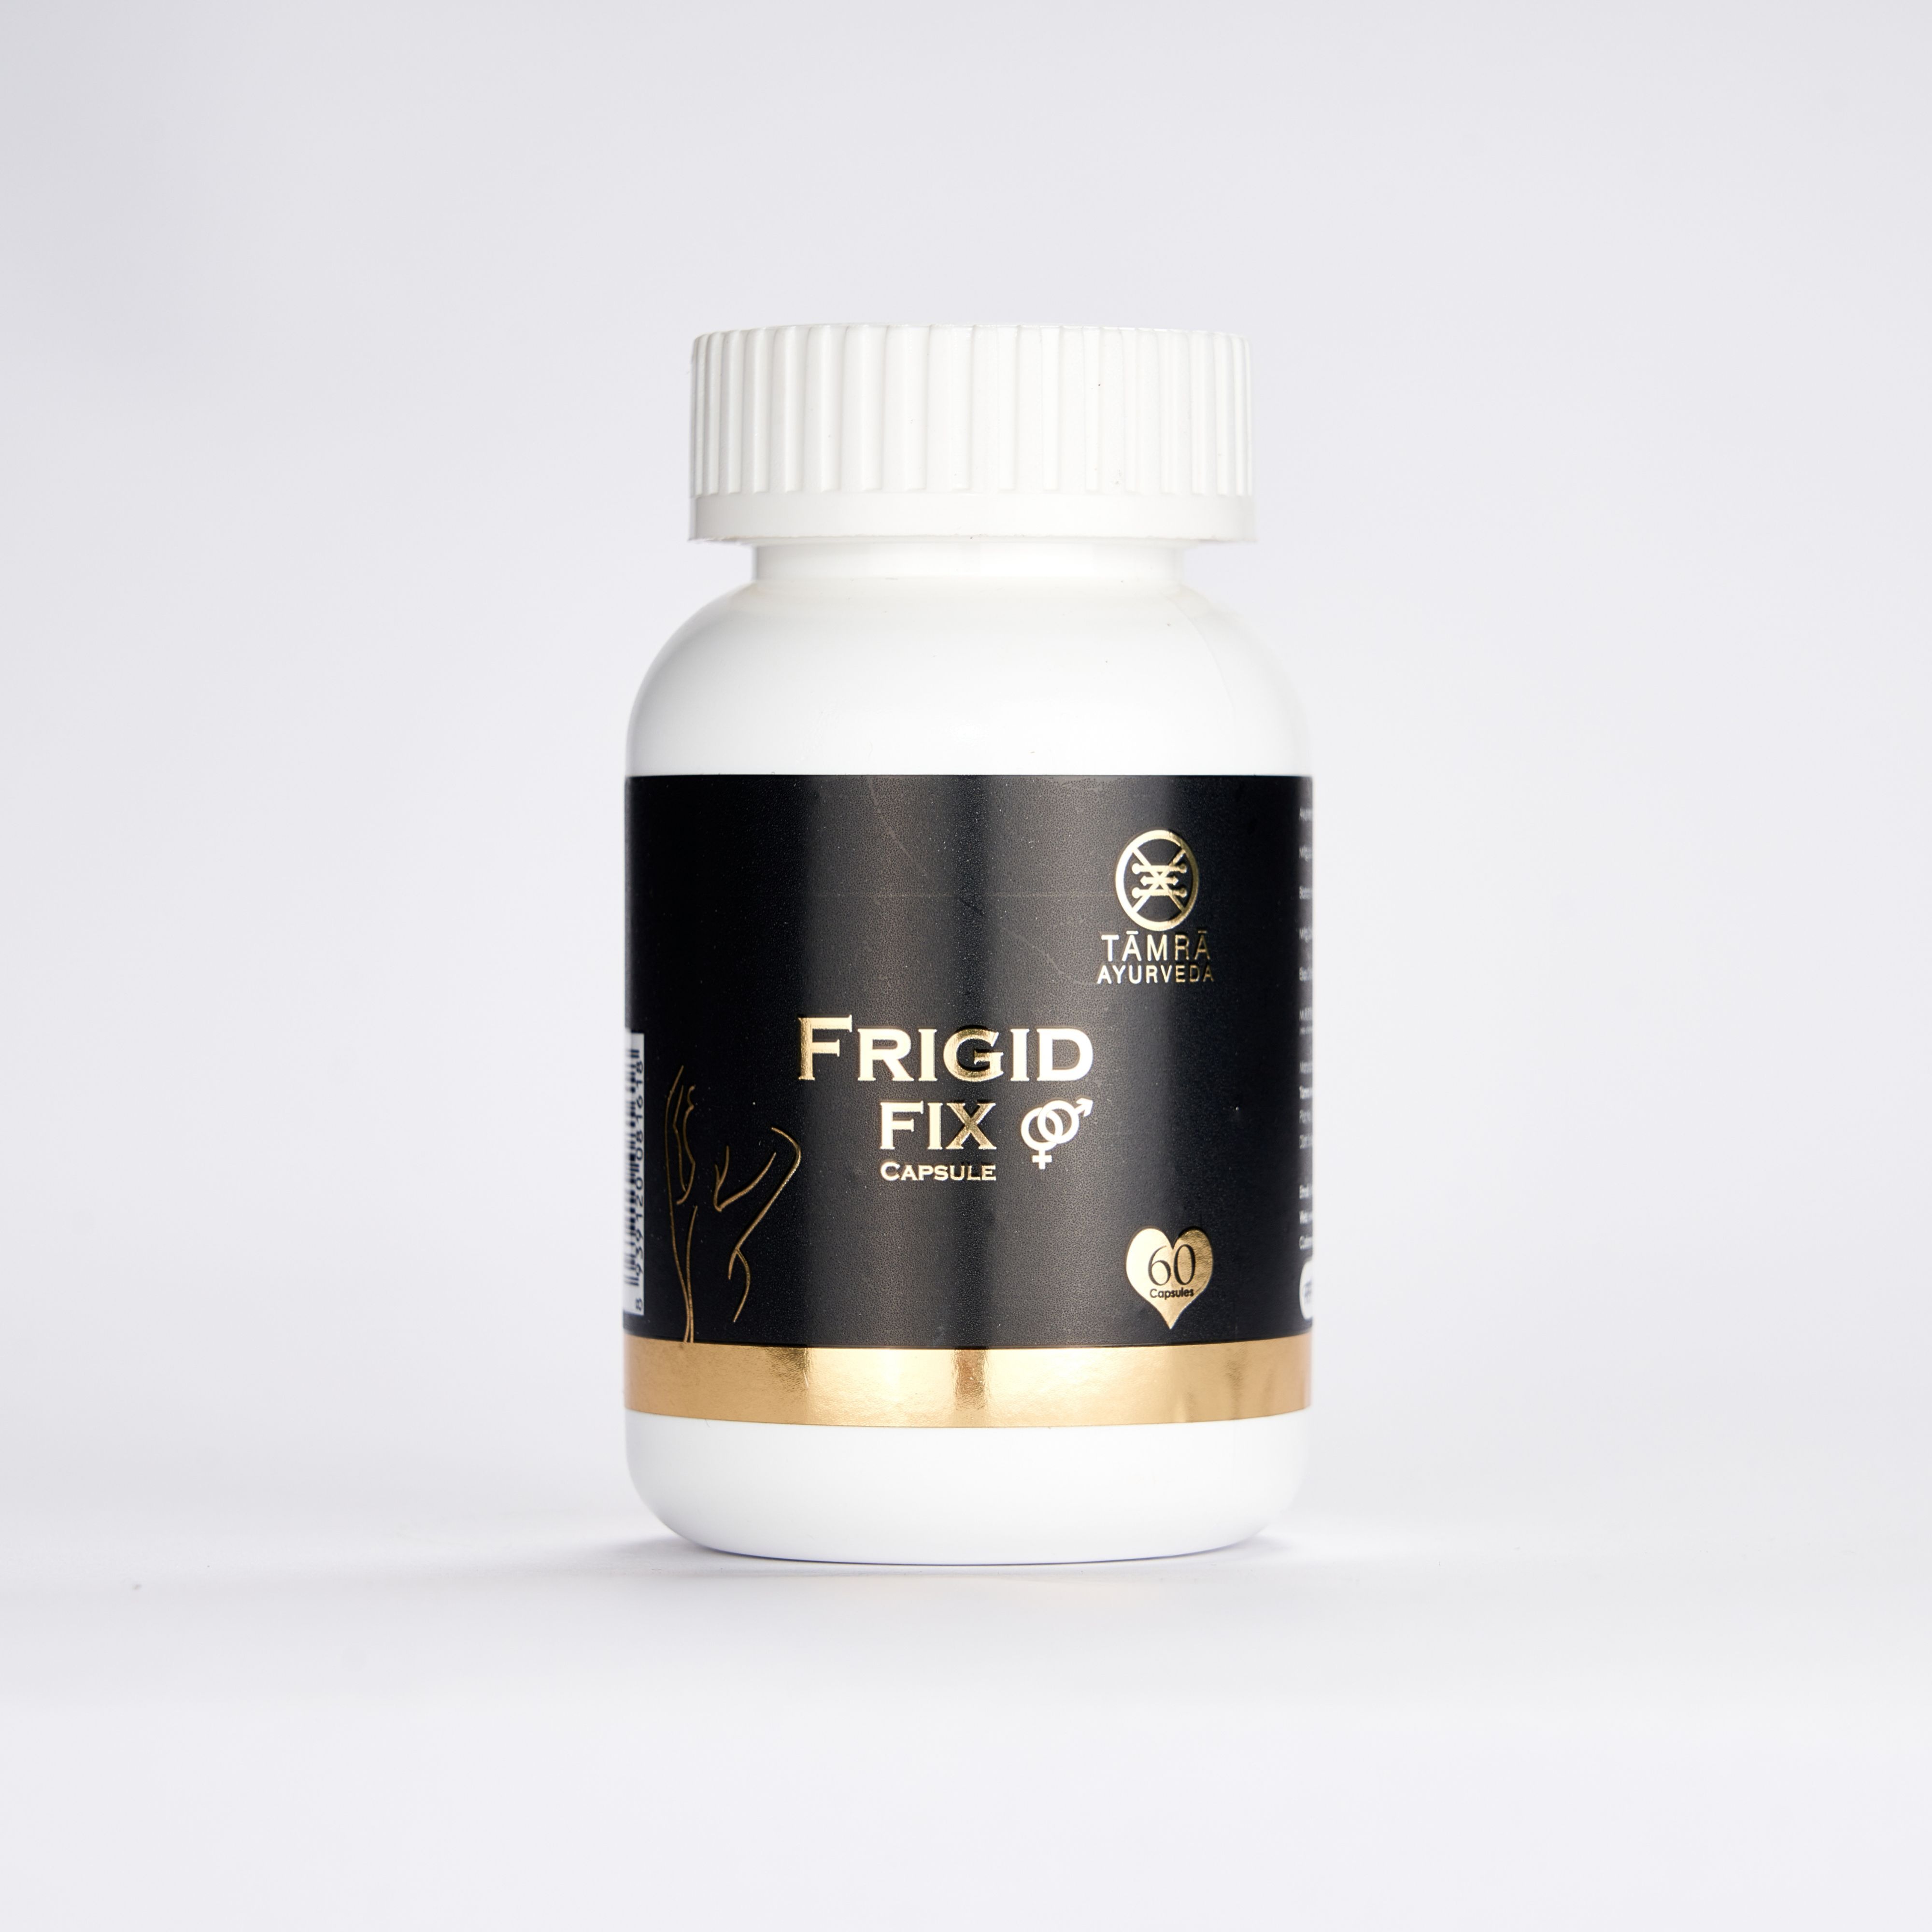 Frigidfix capsule–To increase fertility & overall health in females